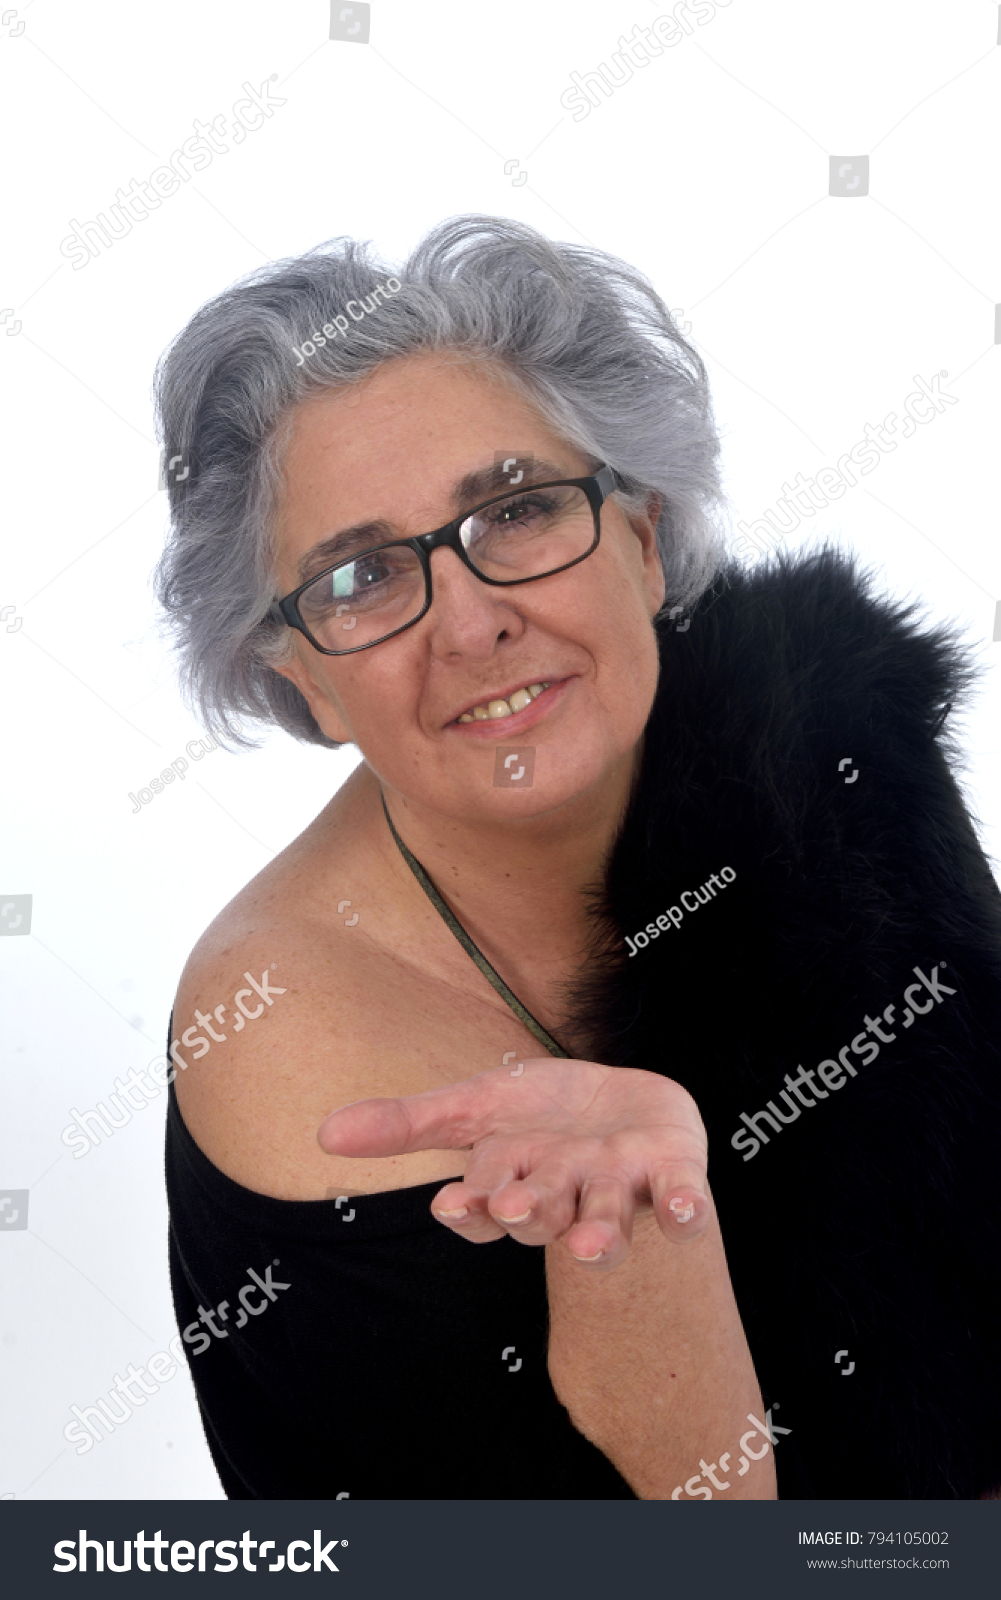 Hot Older Women Pics